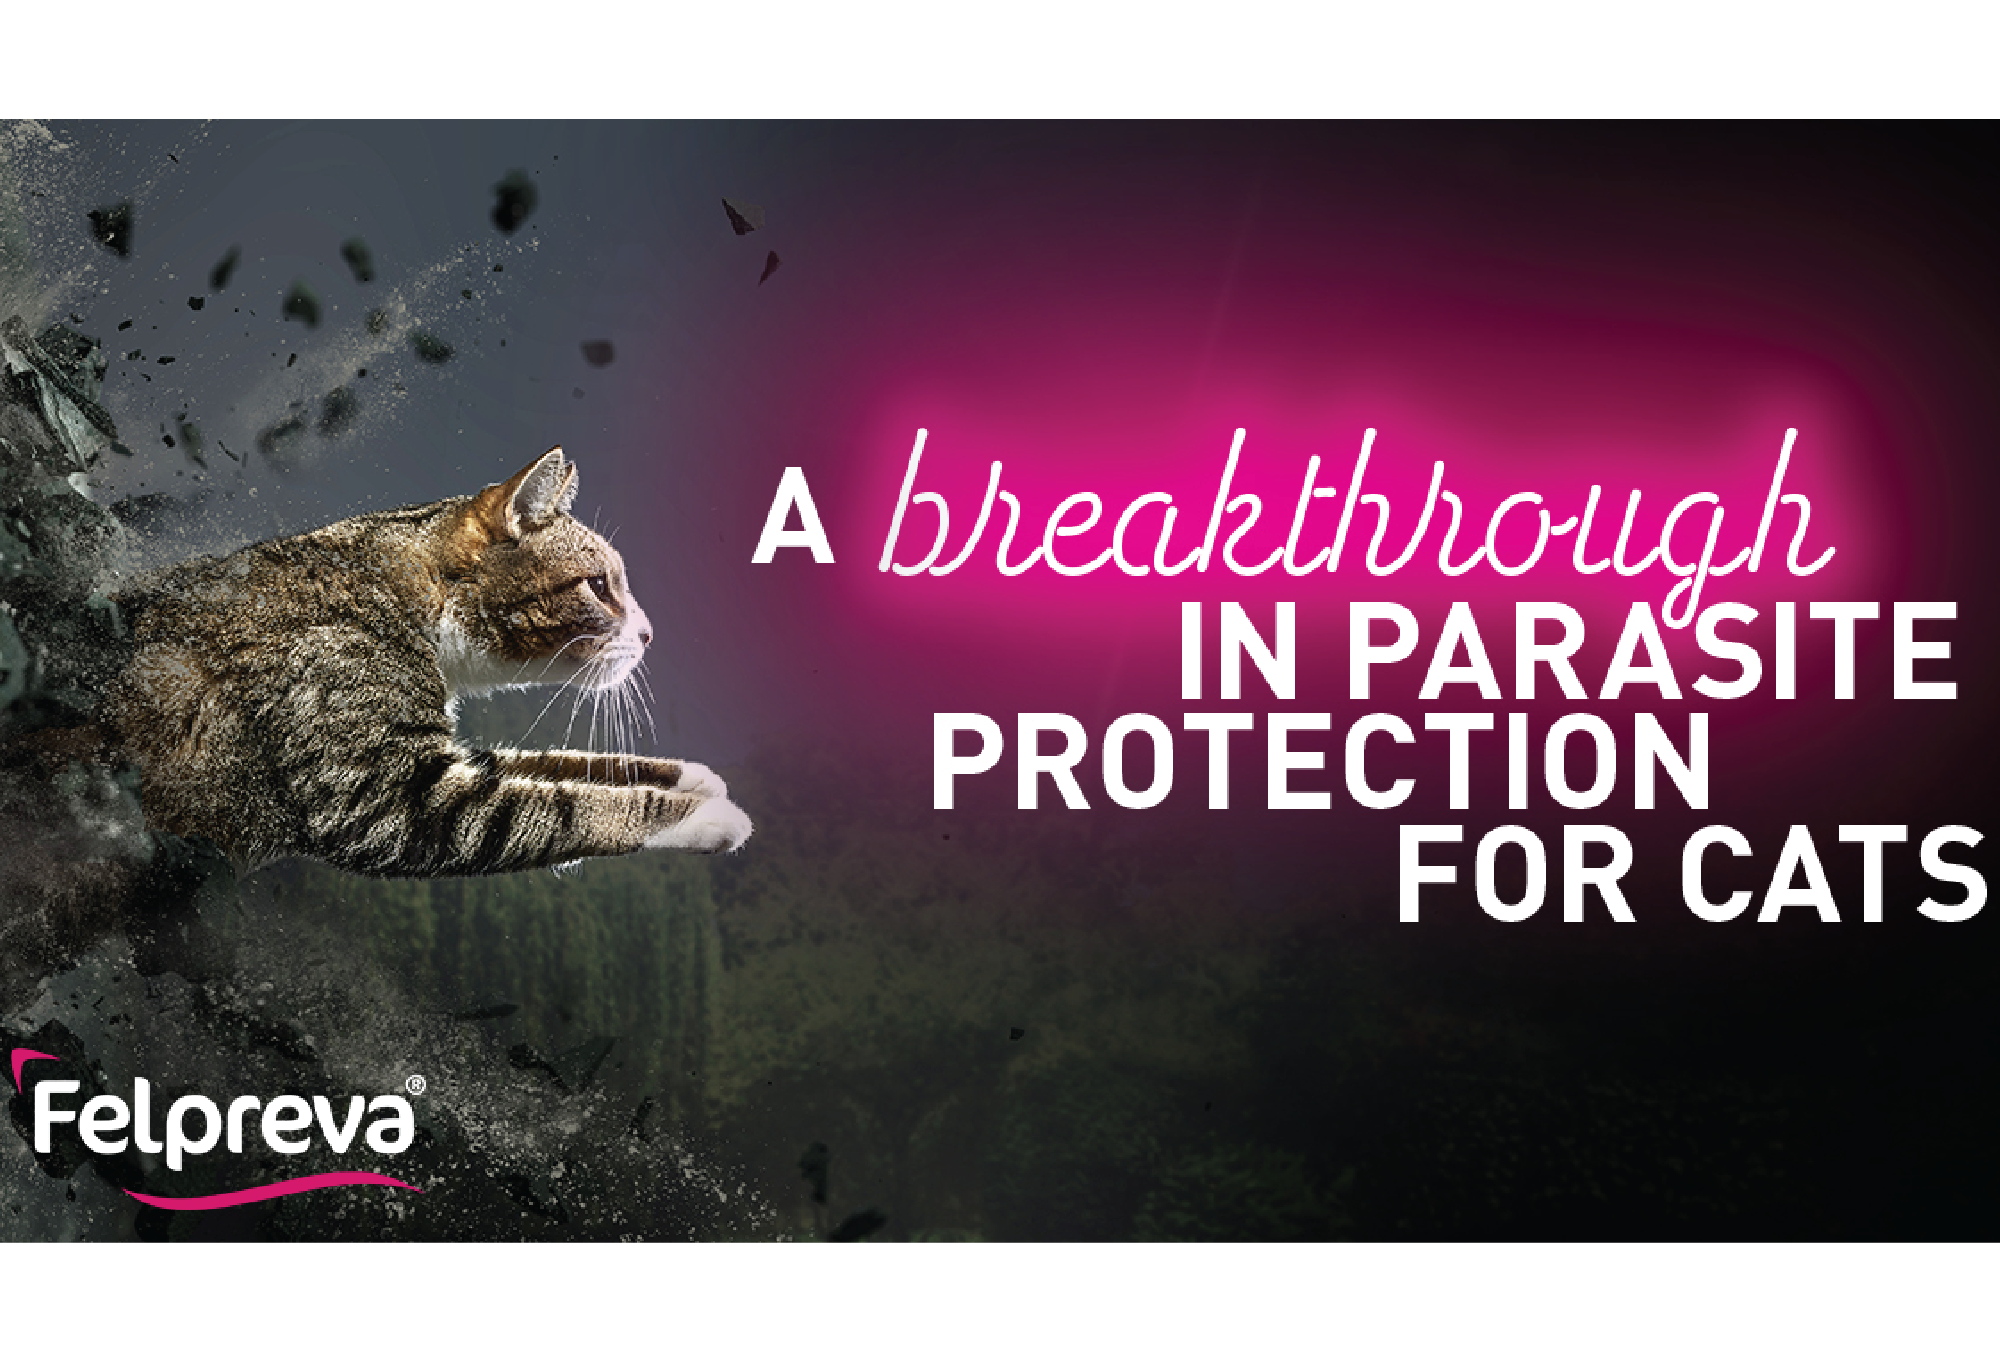 Felpreva（フェルプリーバ）-猫用寄生虫予防の画期的な進歩。この新しいスポットオントリートメントで、あなたのネコちゃんをノミ、ダニ、回虫から守りましょう。 